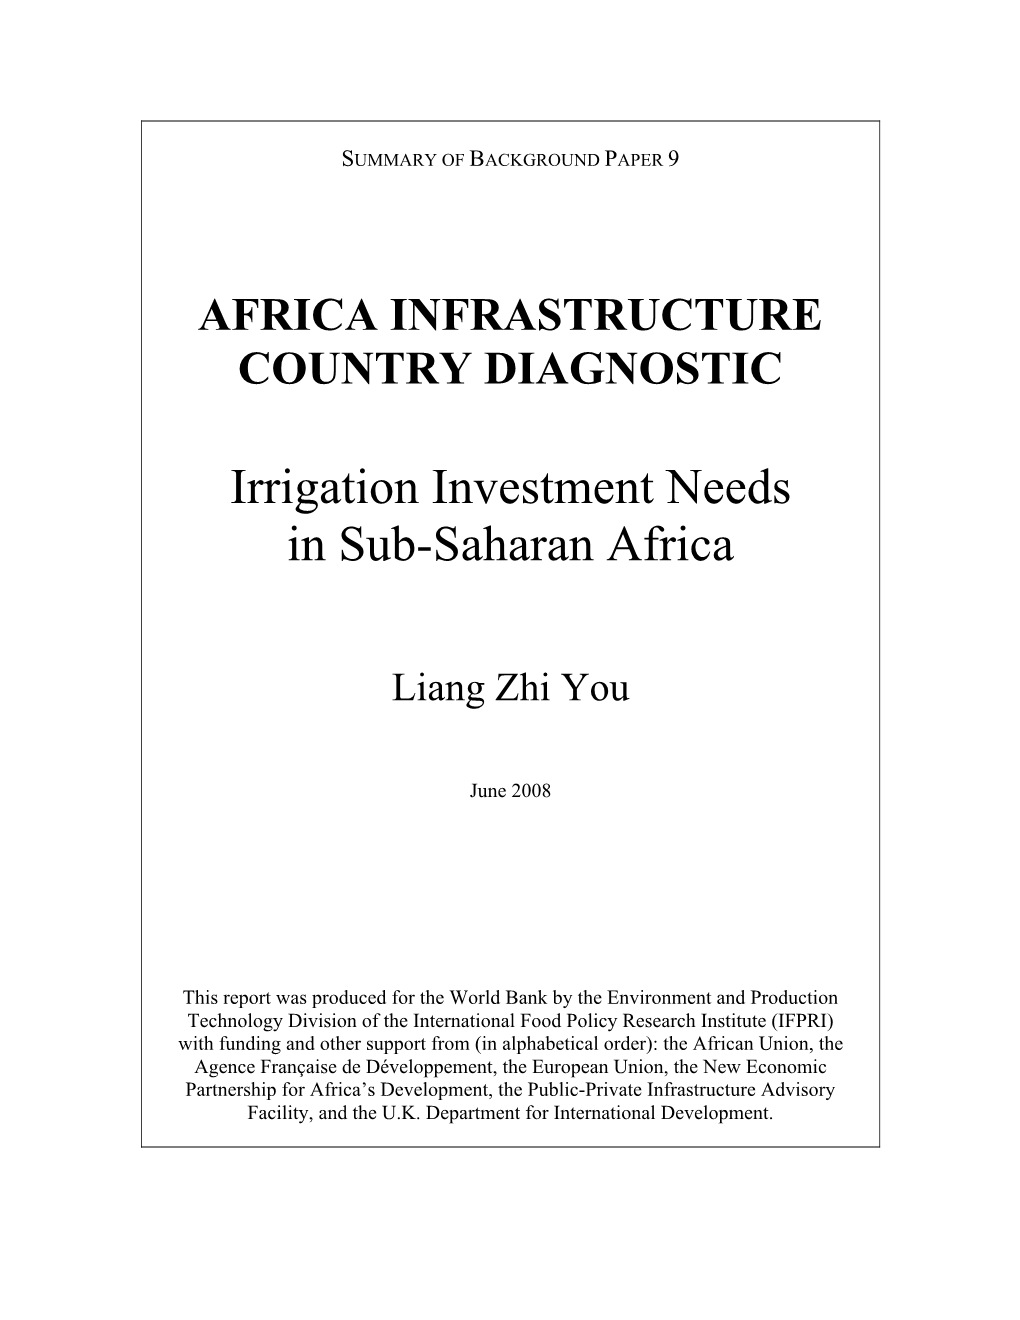 Irrigation Investment Needs in Sub-Saharan Africa